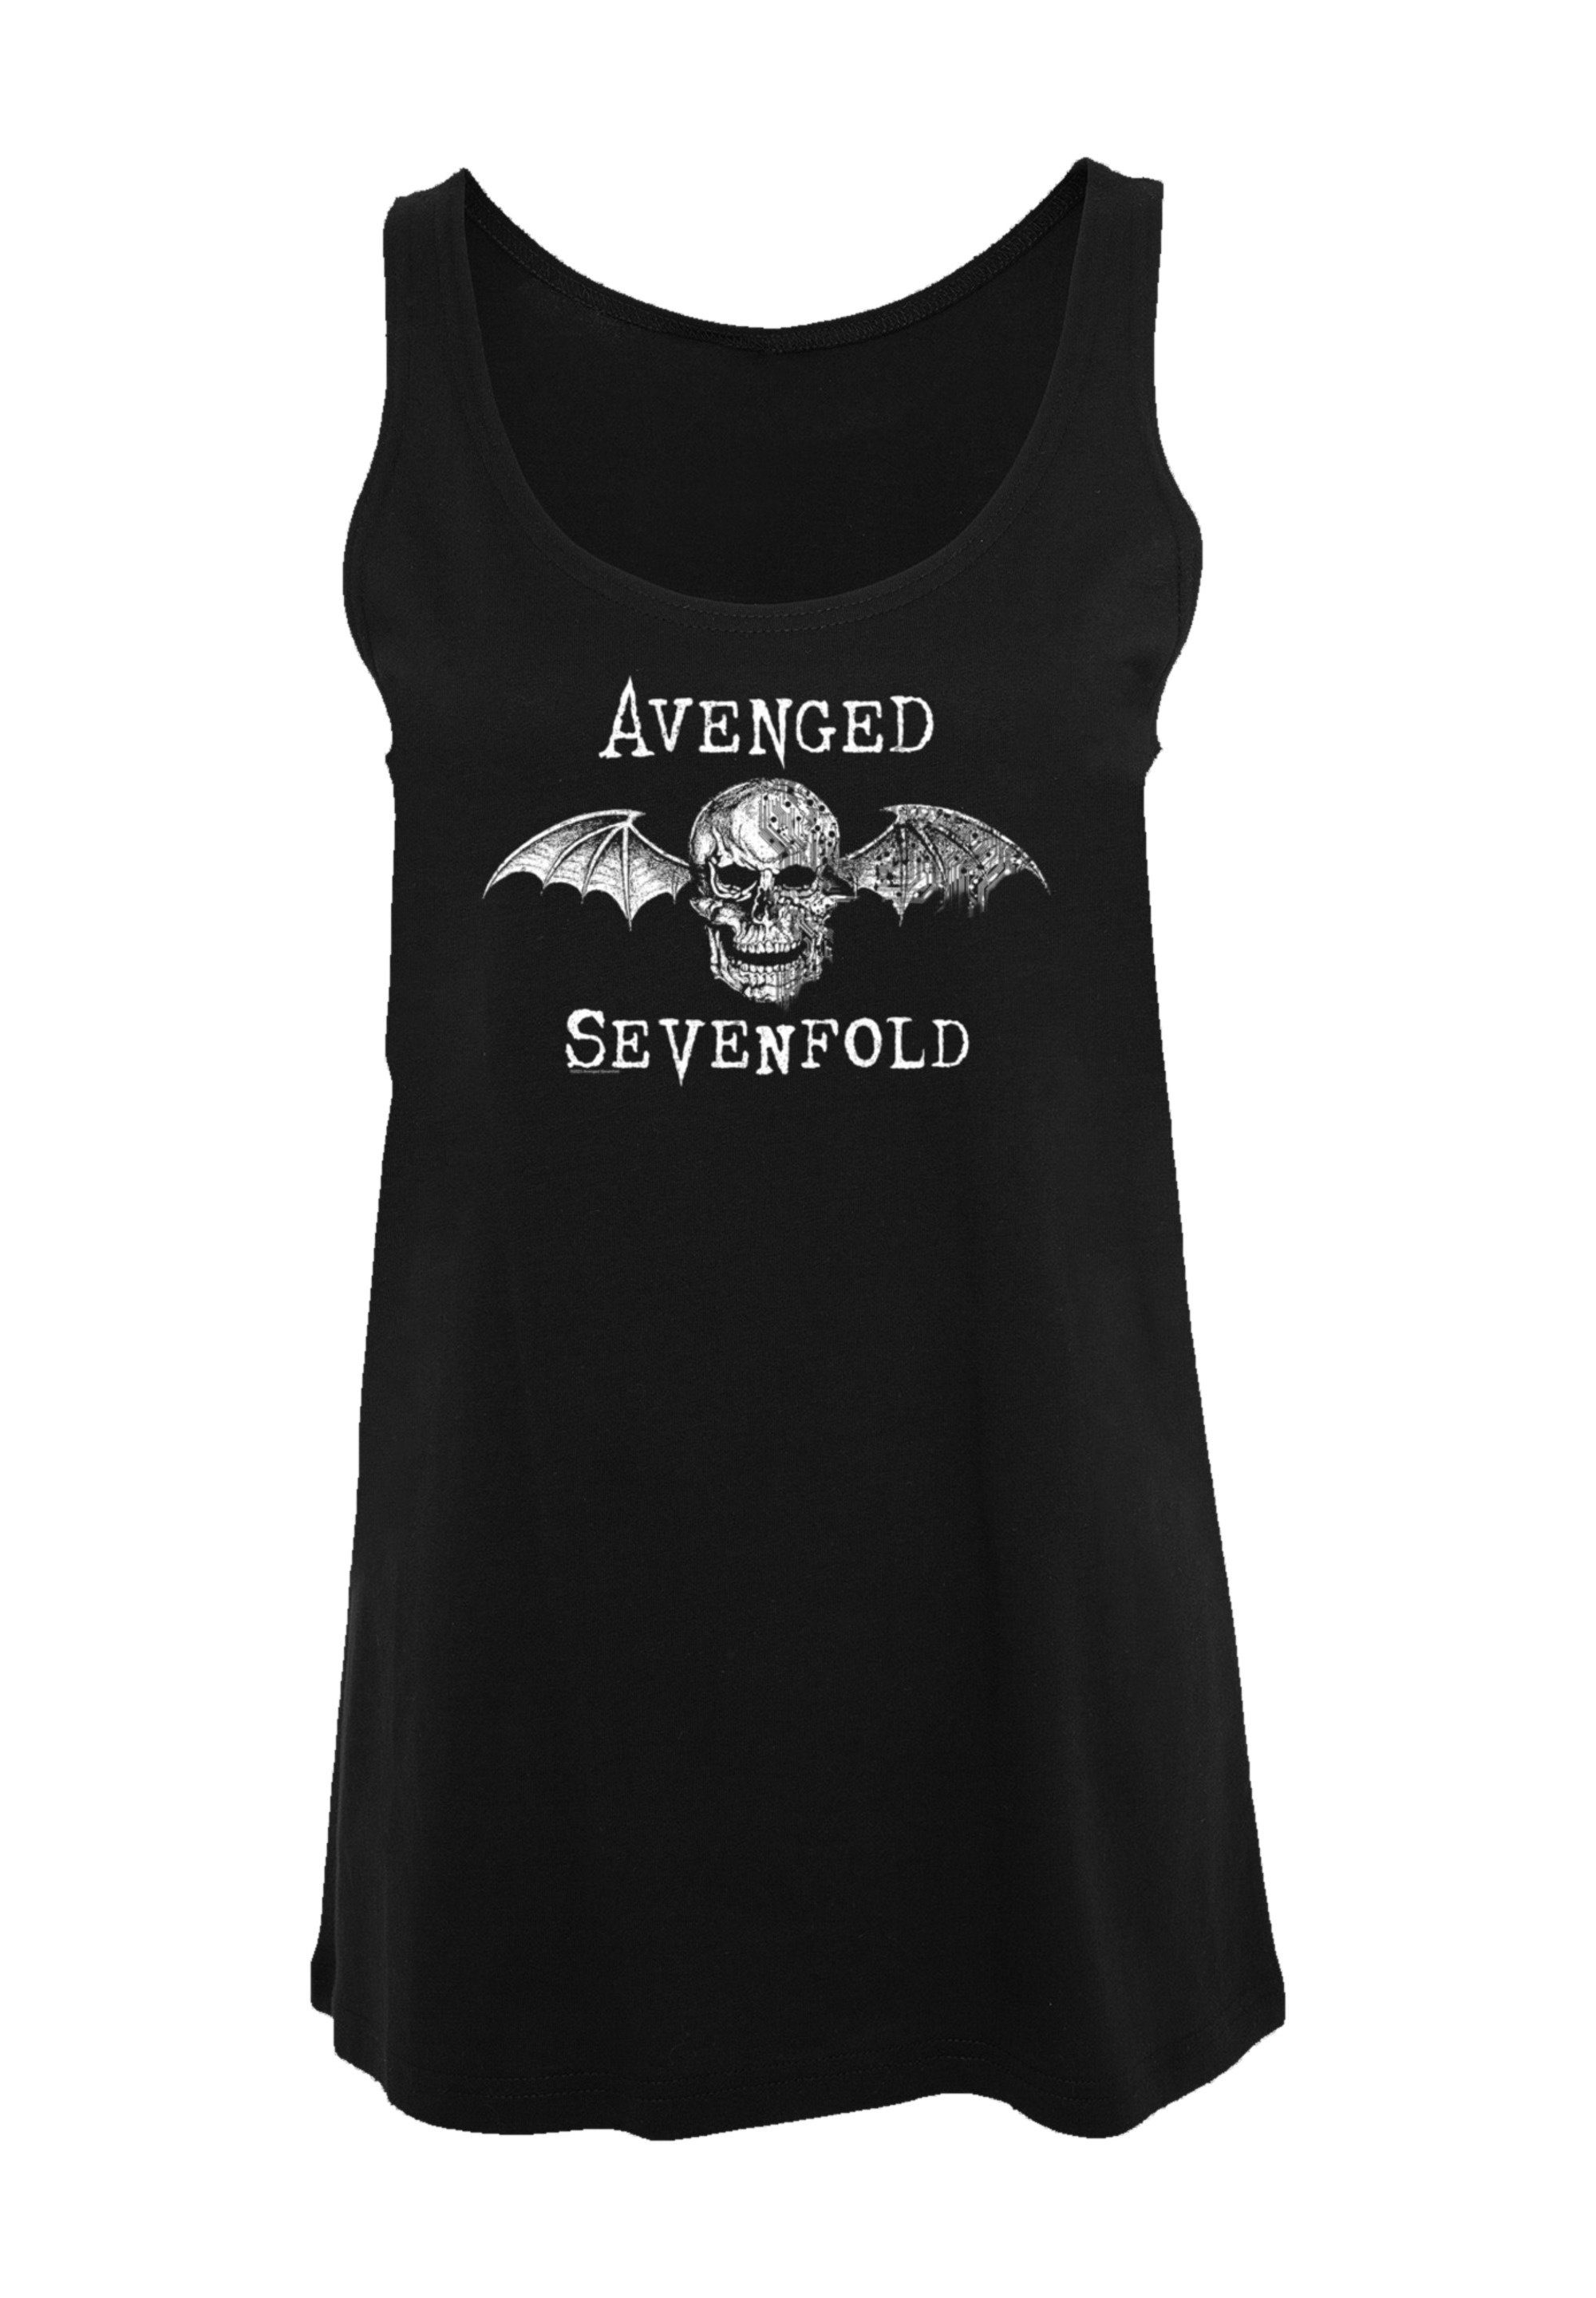 Metal Qualität, Band Avenged Band, Rock Cyborg F4NT4STIC Sevenfold Bat Rock-Musik Premium T-Shirt